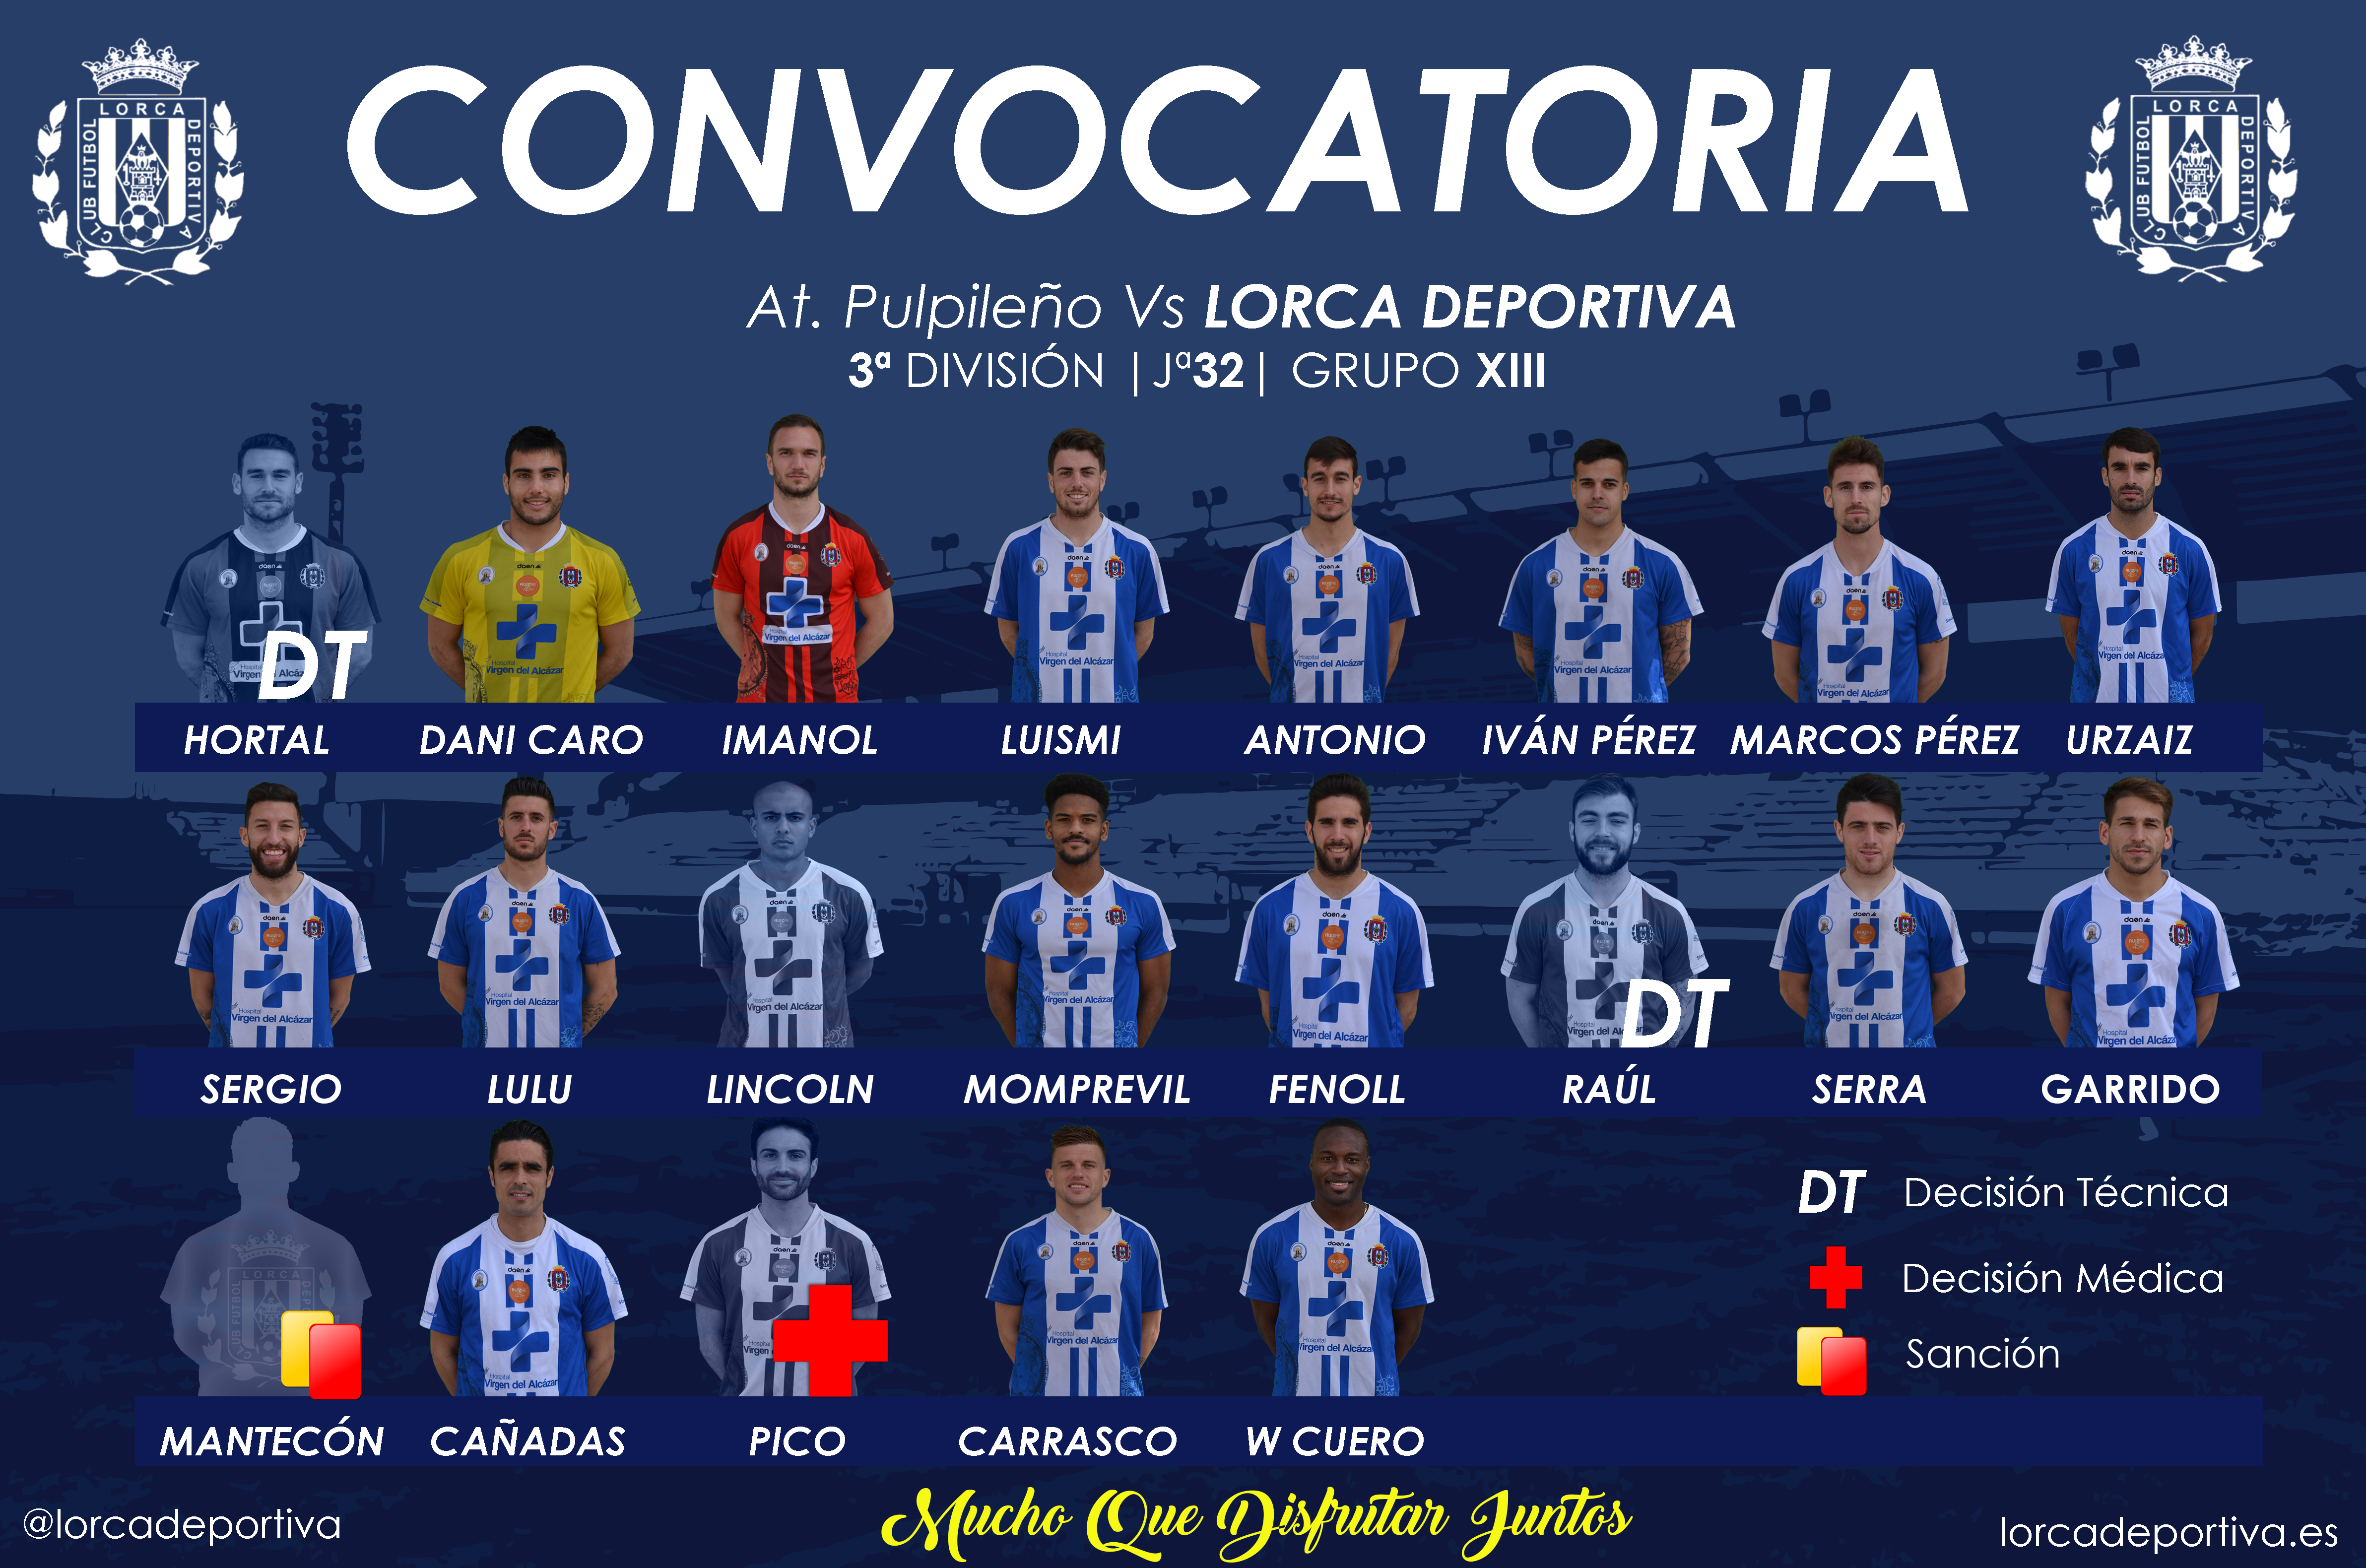 CONVOCATORIA OFICIAL: At. Pulpileño – Lorca Deportiva